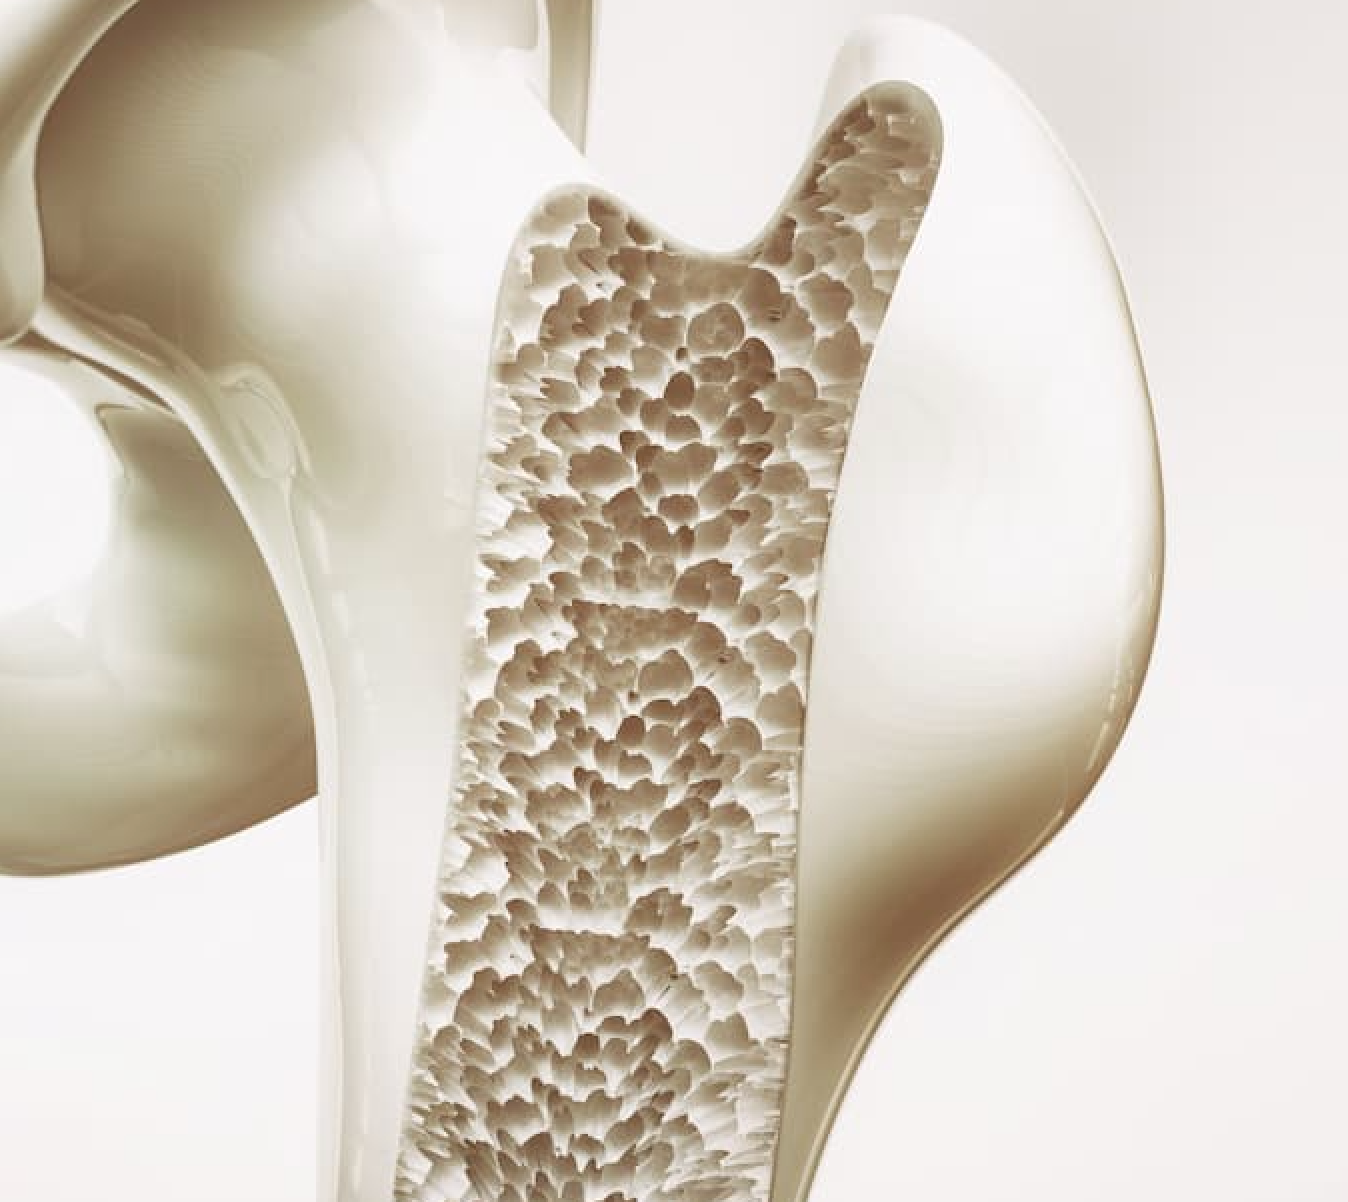 Bone density | Image Credit: Adobe stock/Crevis